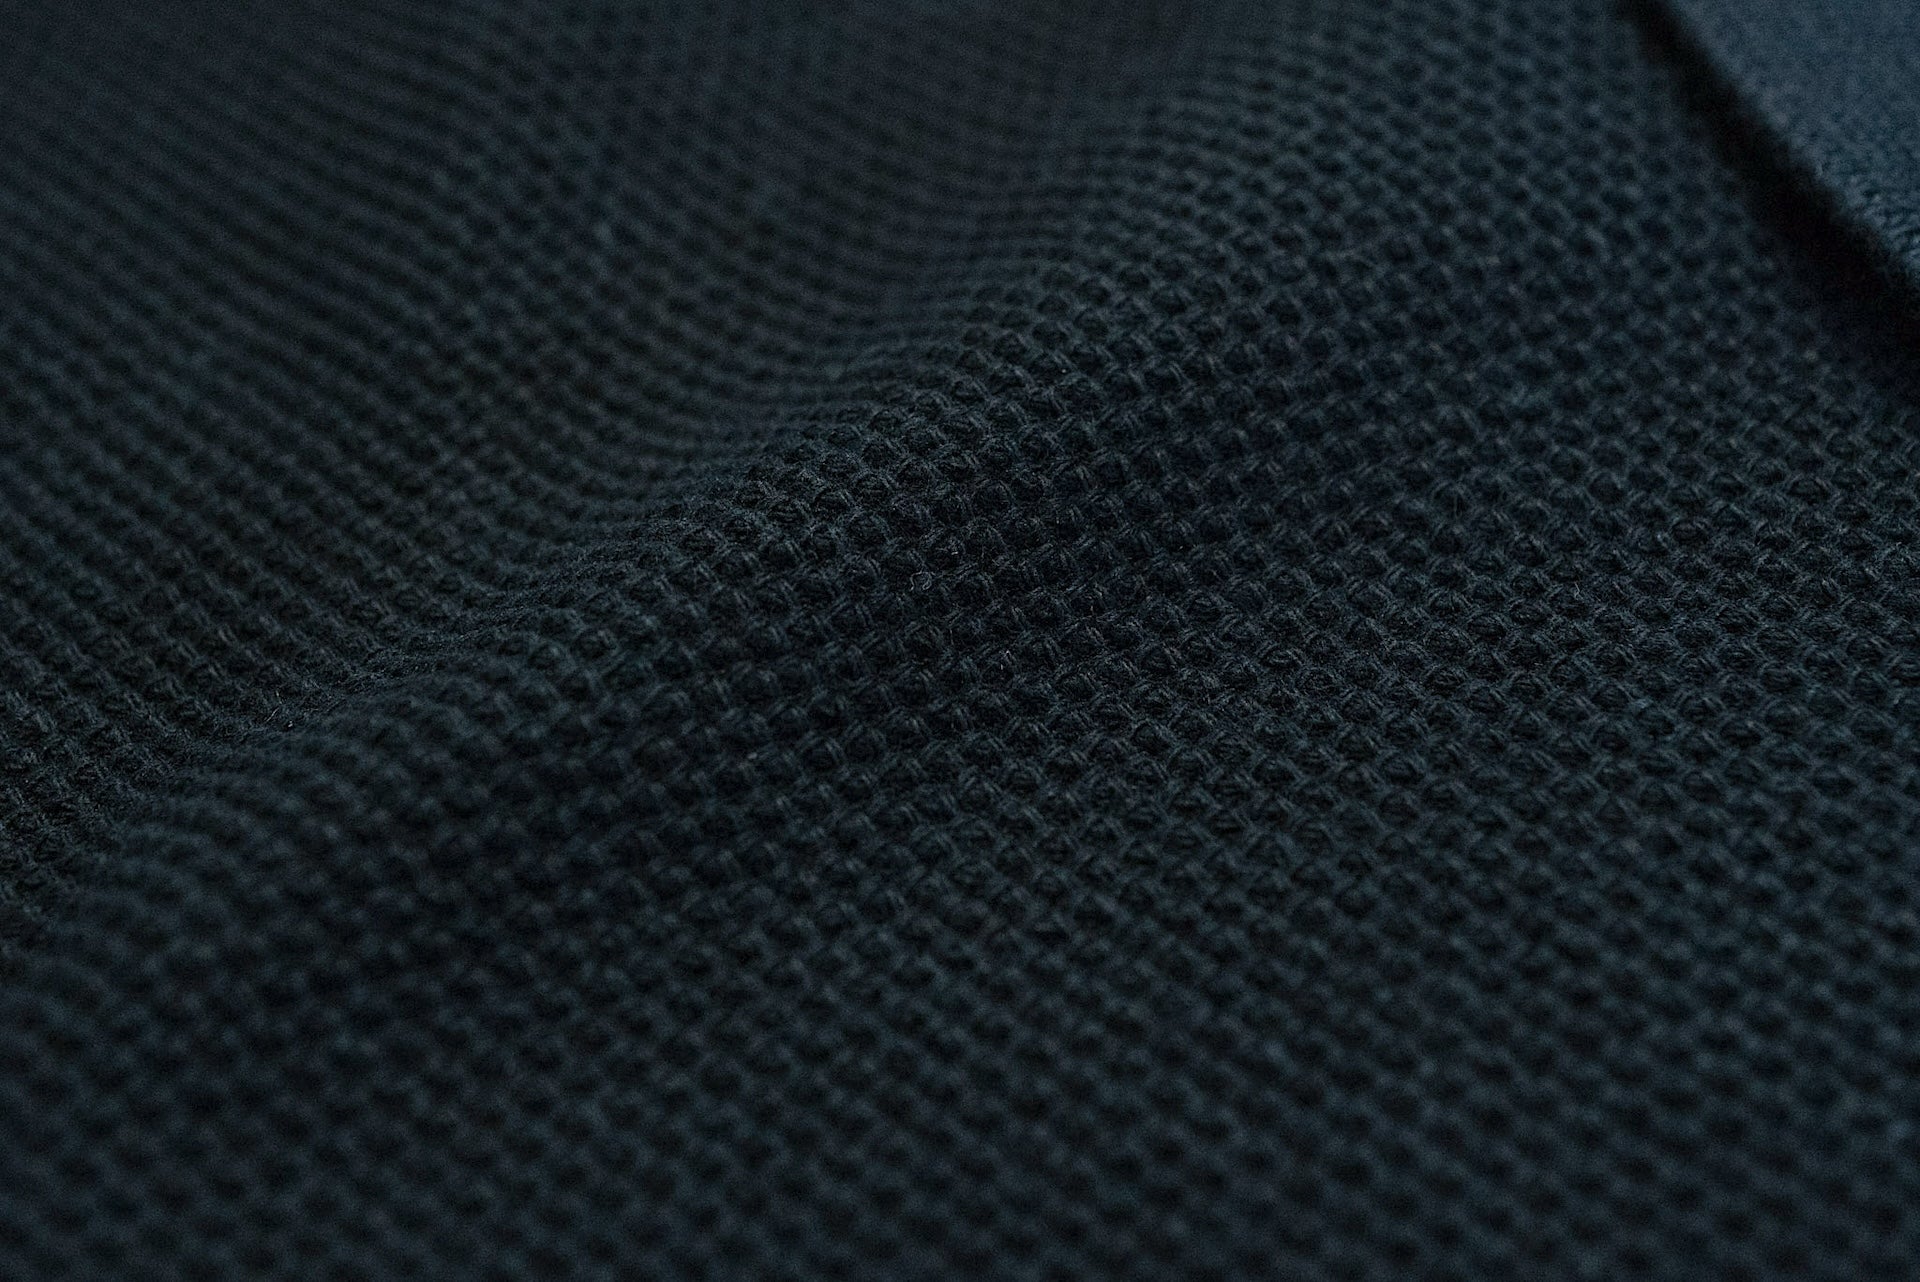 Boncoura Heavyweight Polo Shirt (Black)